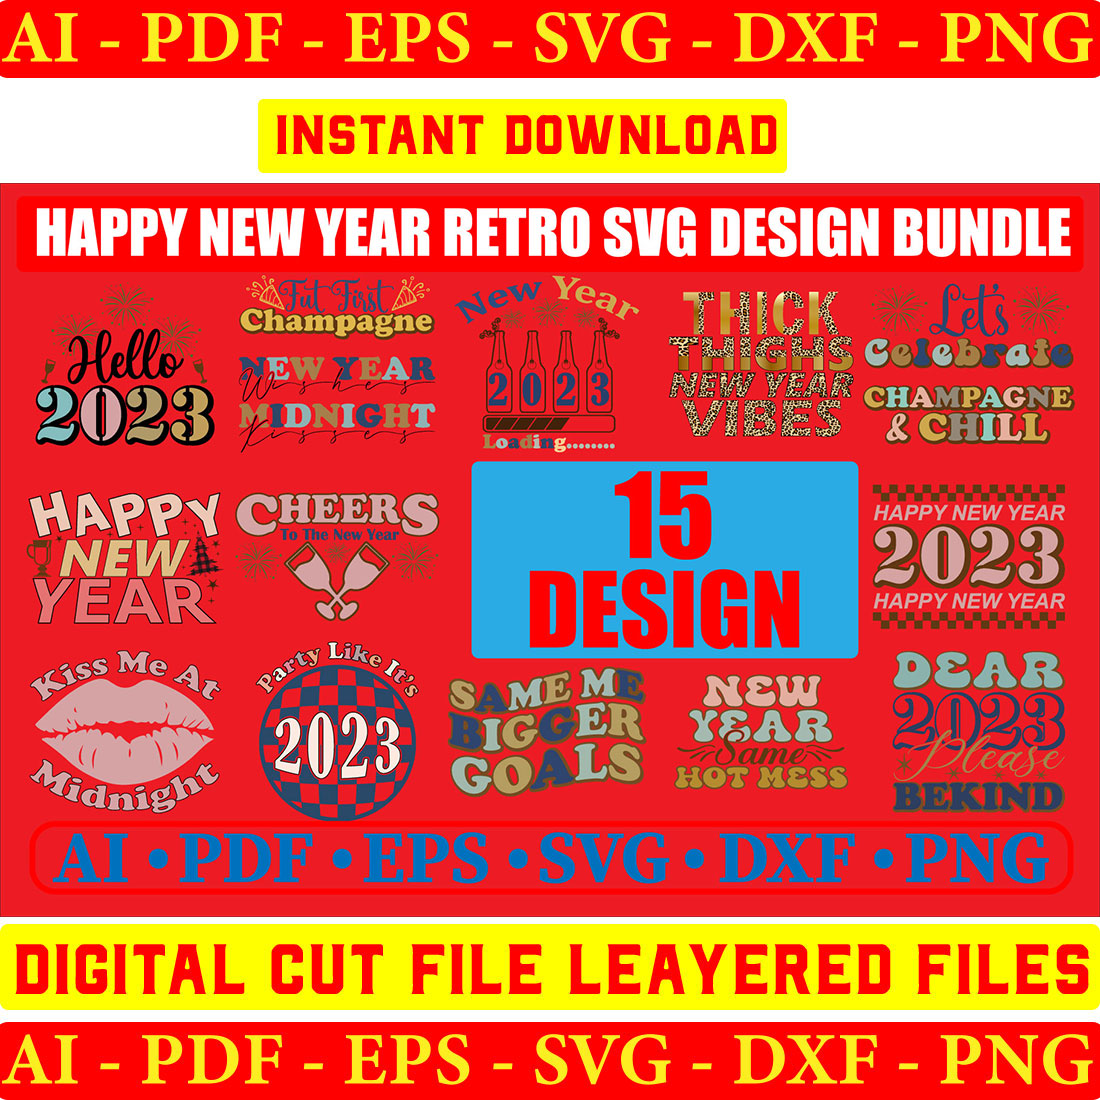 Happy New Year Retro SVG Designs Bundle cover image.